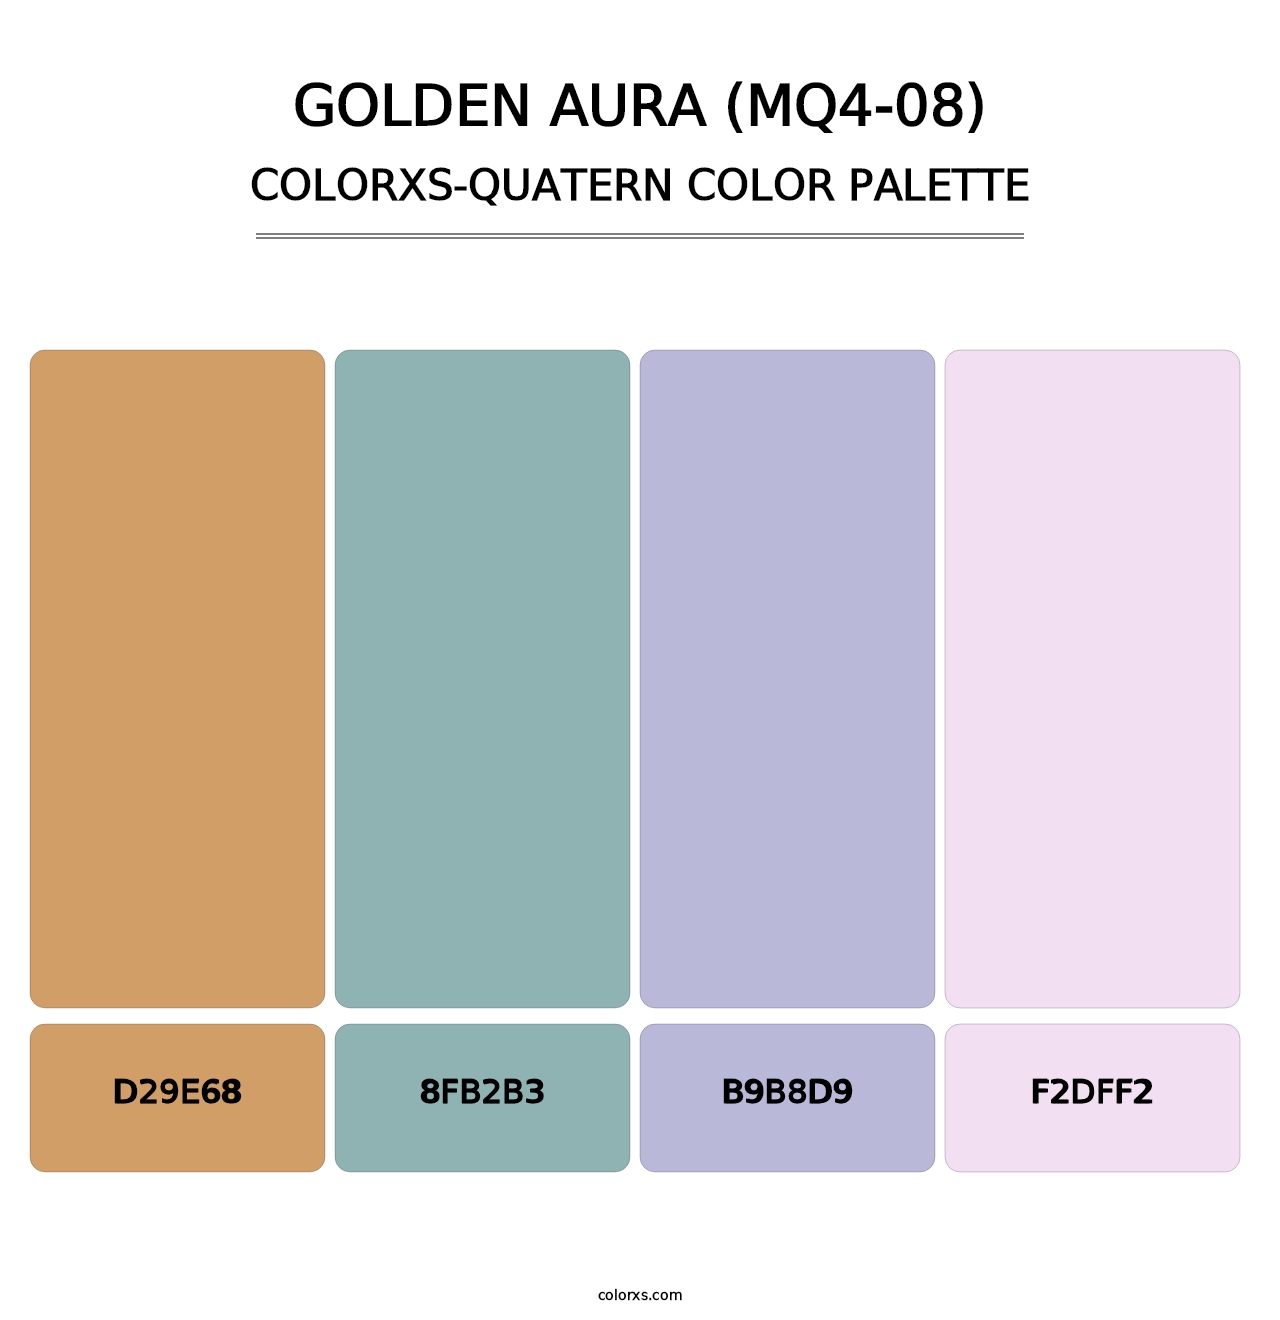 Golden Aura (MQ4-08) - Colorxs Quatern Palette